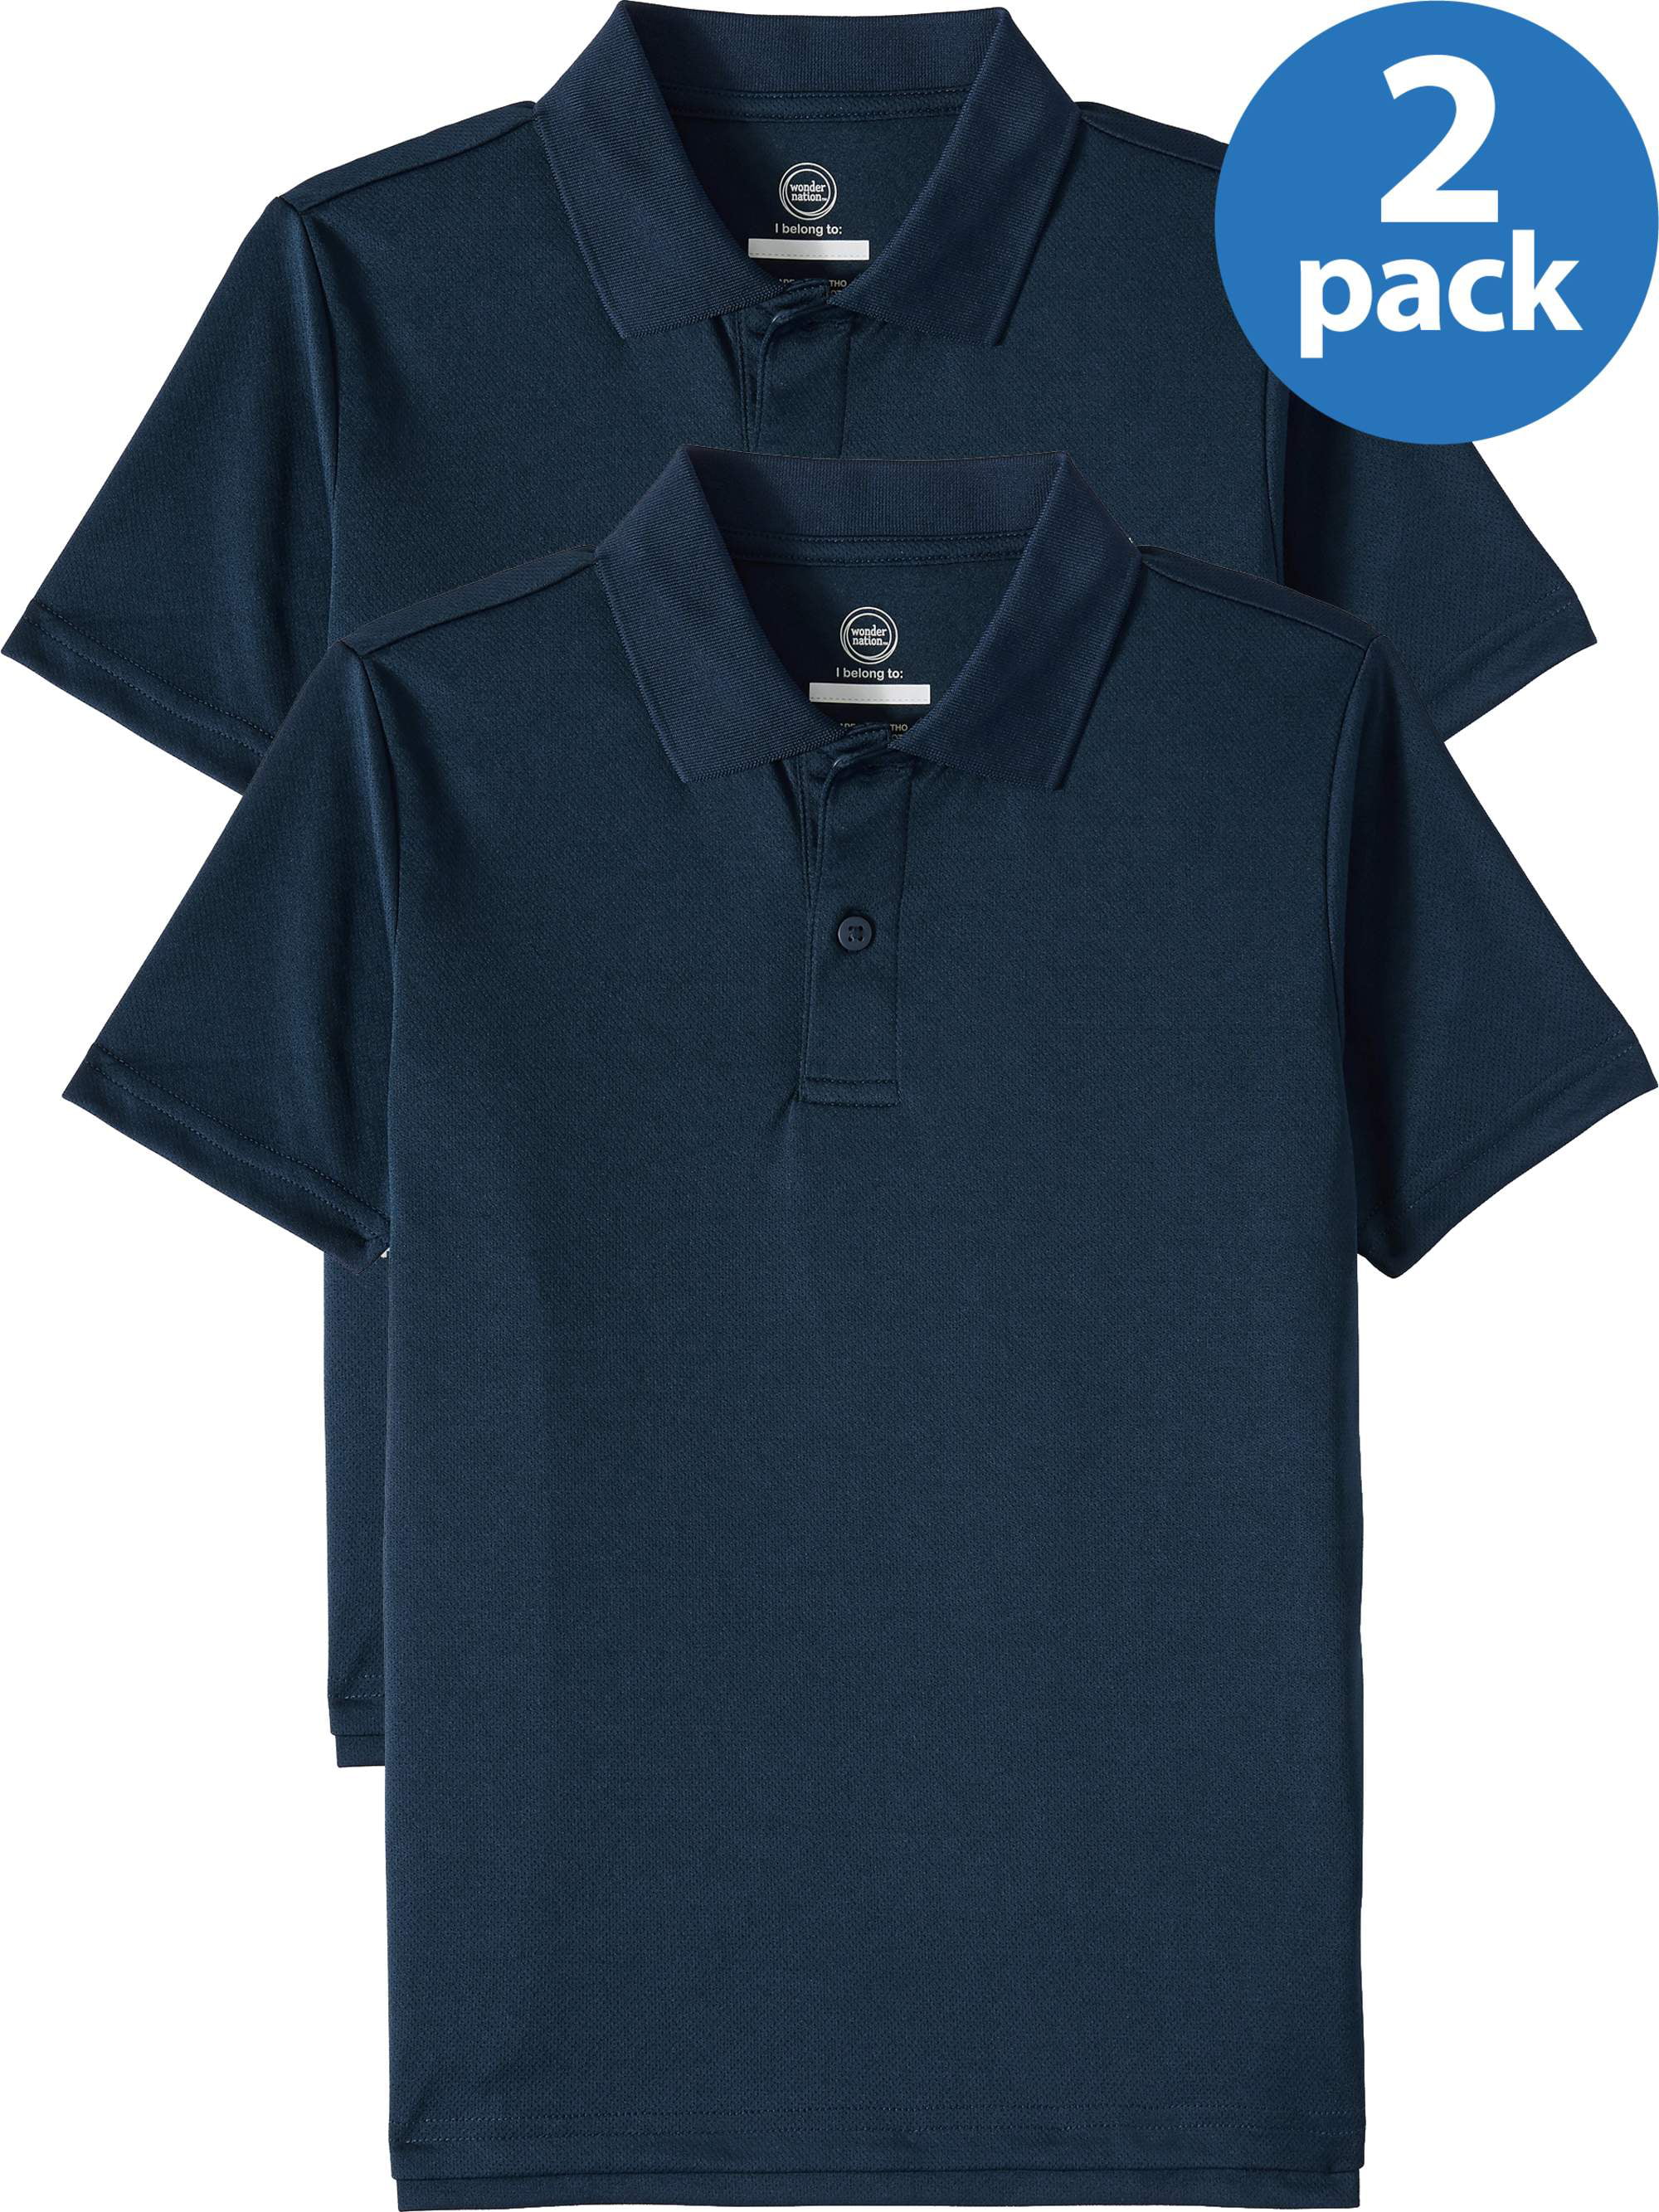 Plain Polo Tee Short Sleeve T-Shirt School Shirts Uniform PE Top Gym Tops Pack of 2 or 4 Boys Girls GW CLASSYOUTFIT 2 X 4X